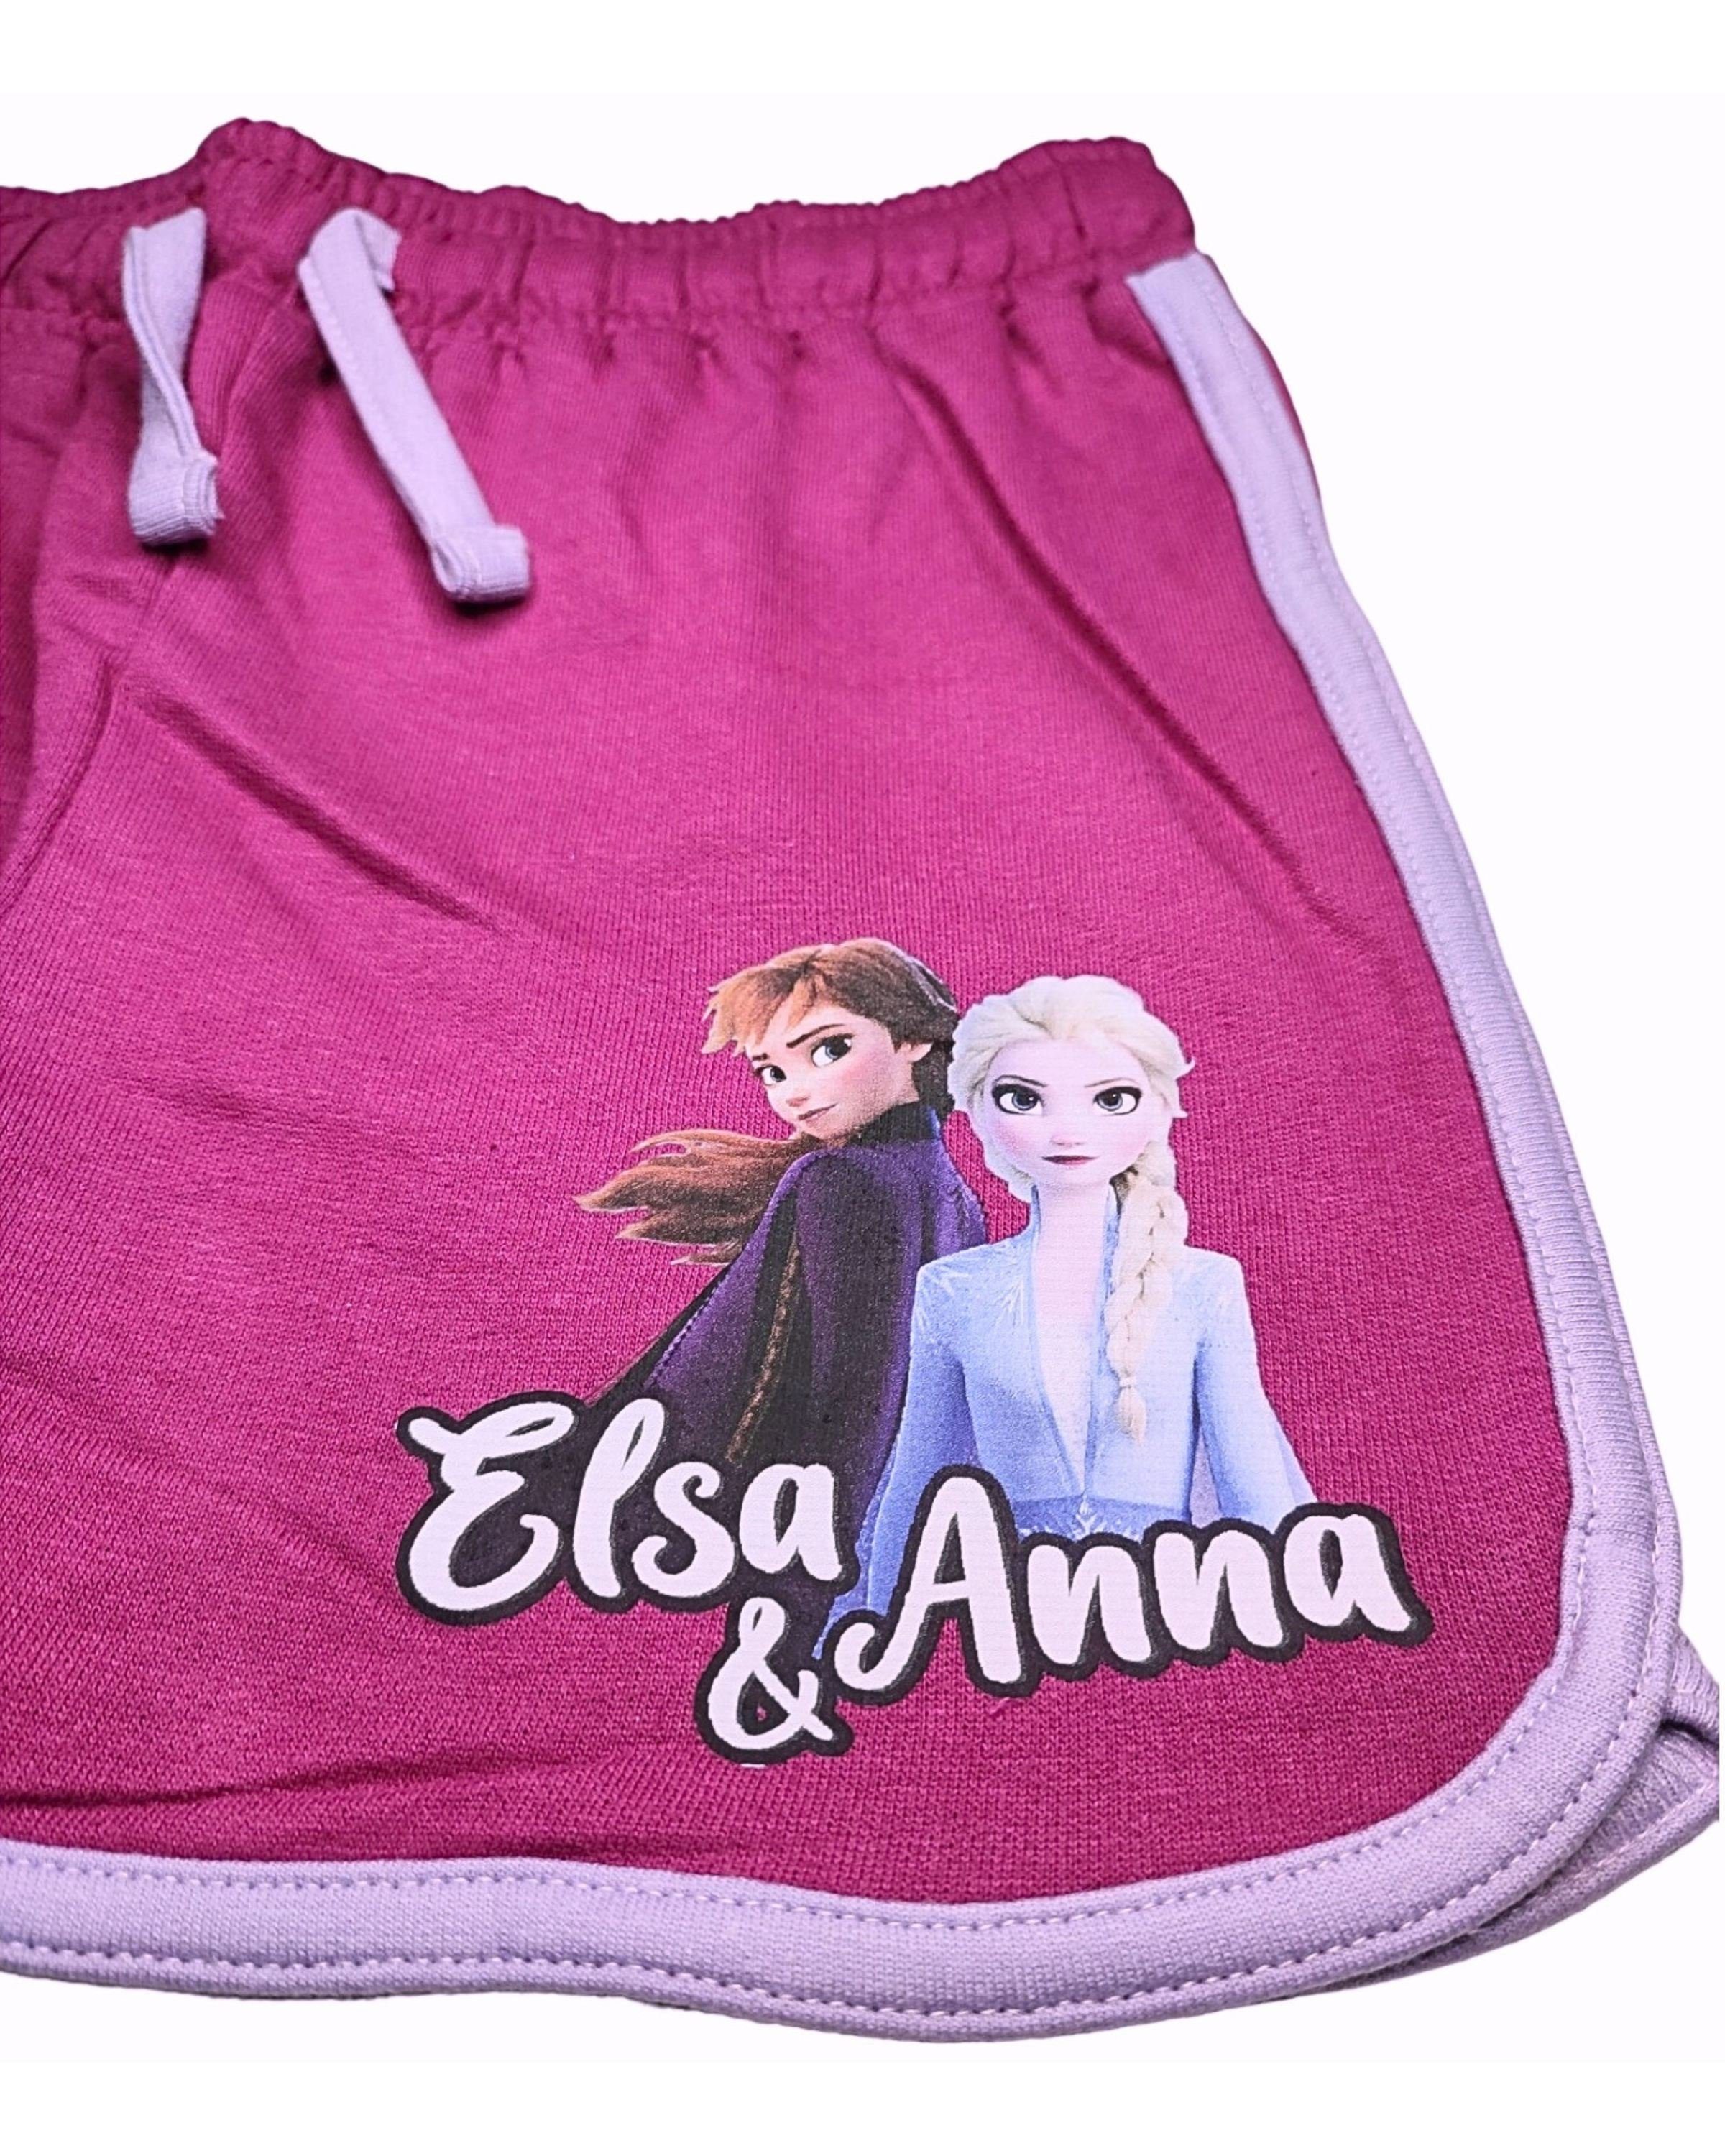 Elsa 98 kurze & Dunkellila 128 Gr. aus Mädchen Frozen Baumwolle Hose Shorts Disney cm - Anna